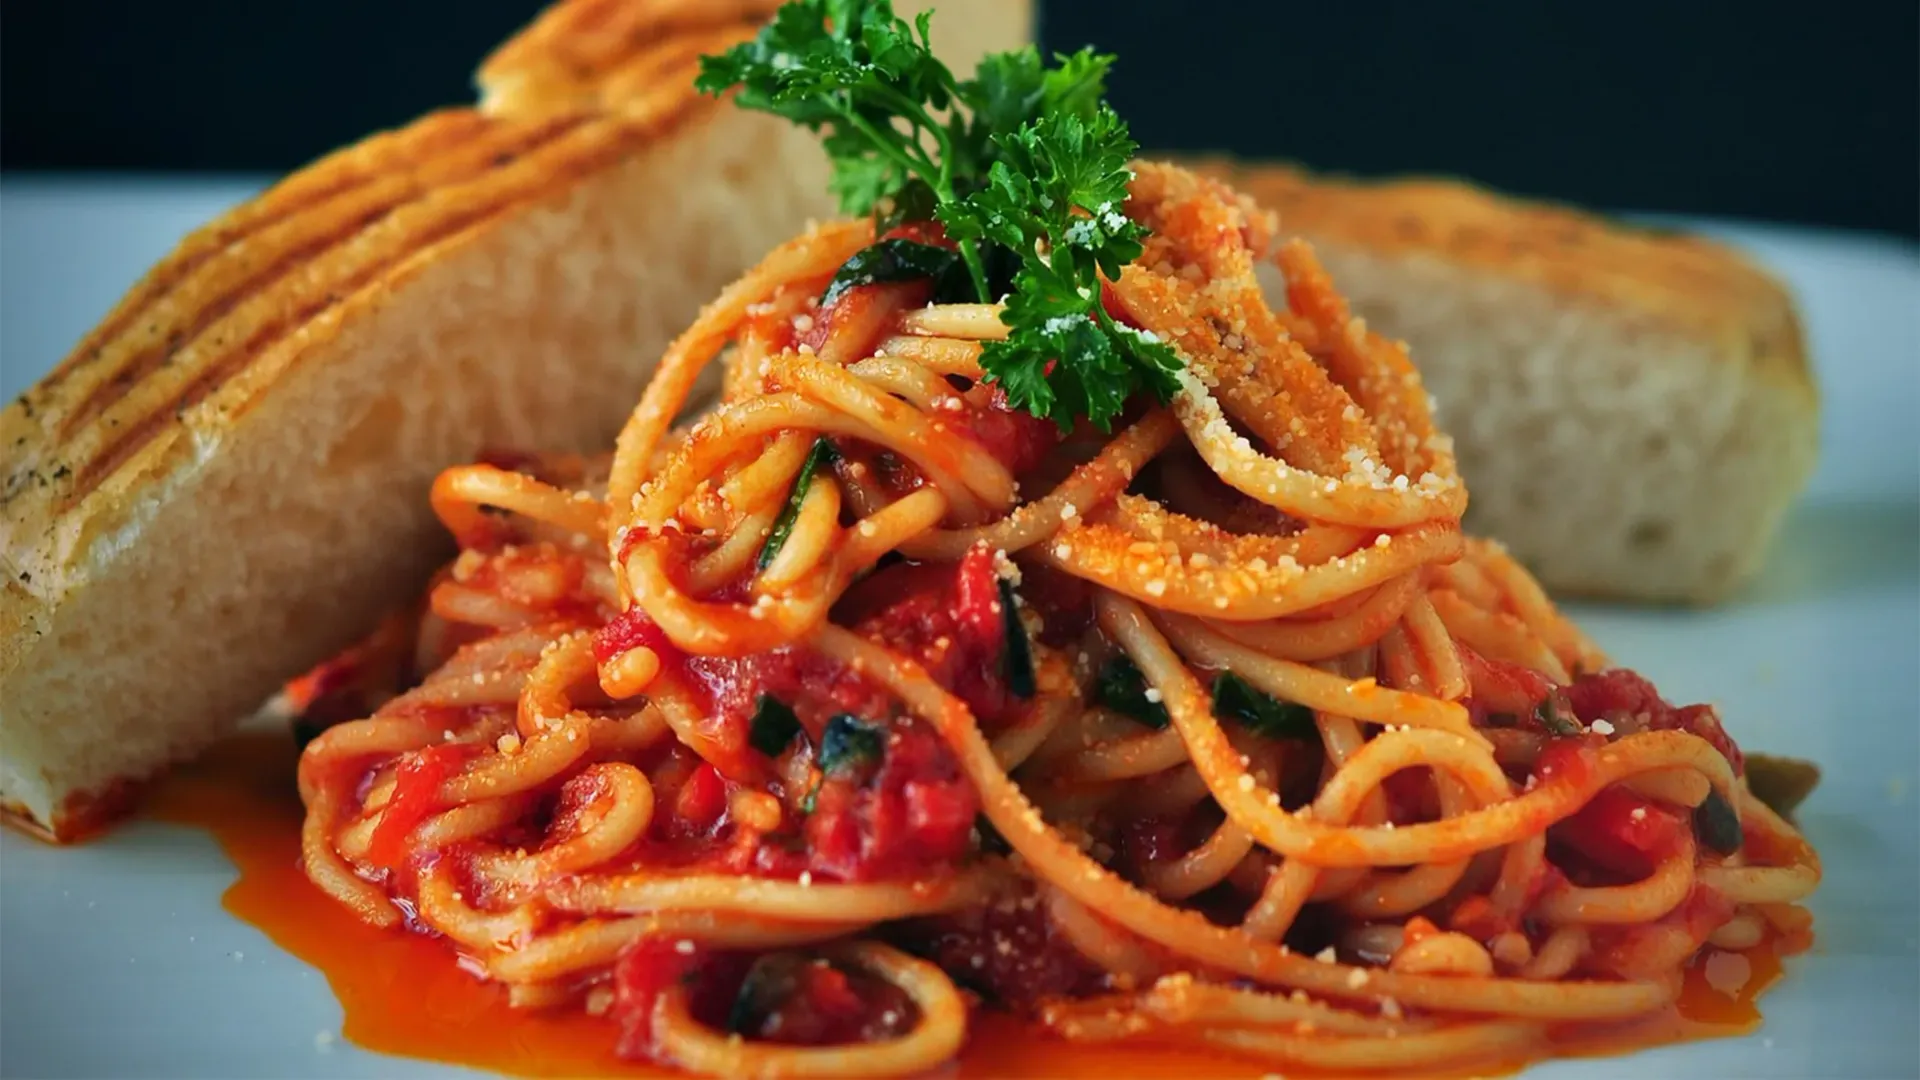 A plate of spaghetti on a restaurant table